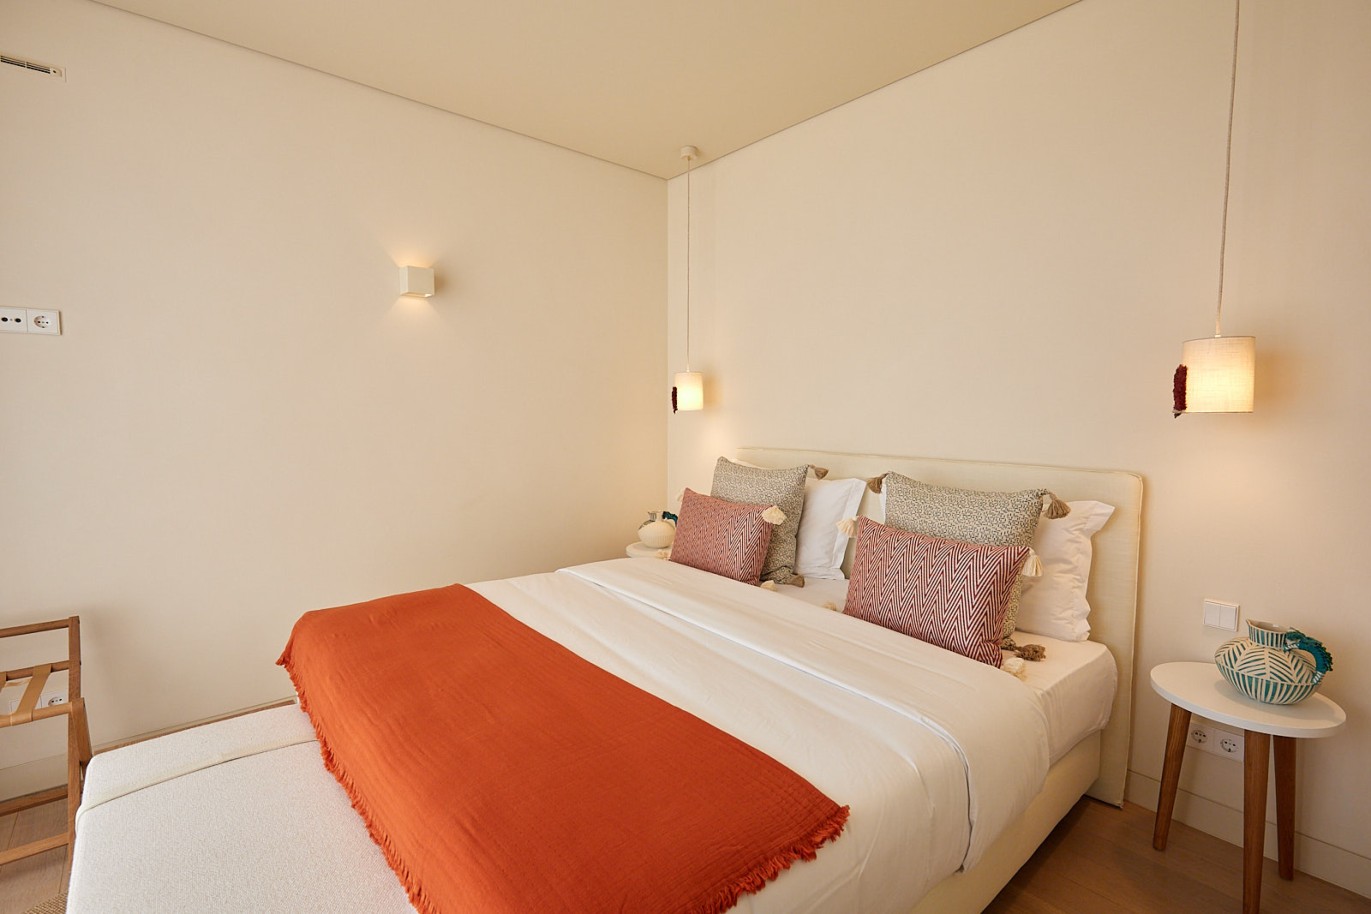 3 bedroom apartment in resort, for sale in Porches, Algarve_230735